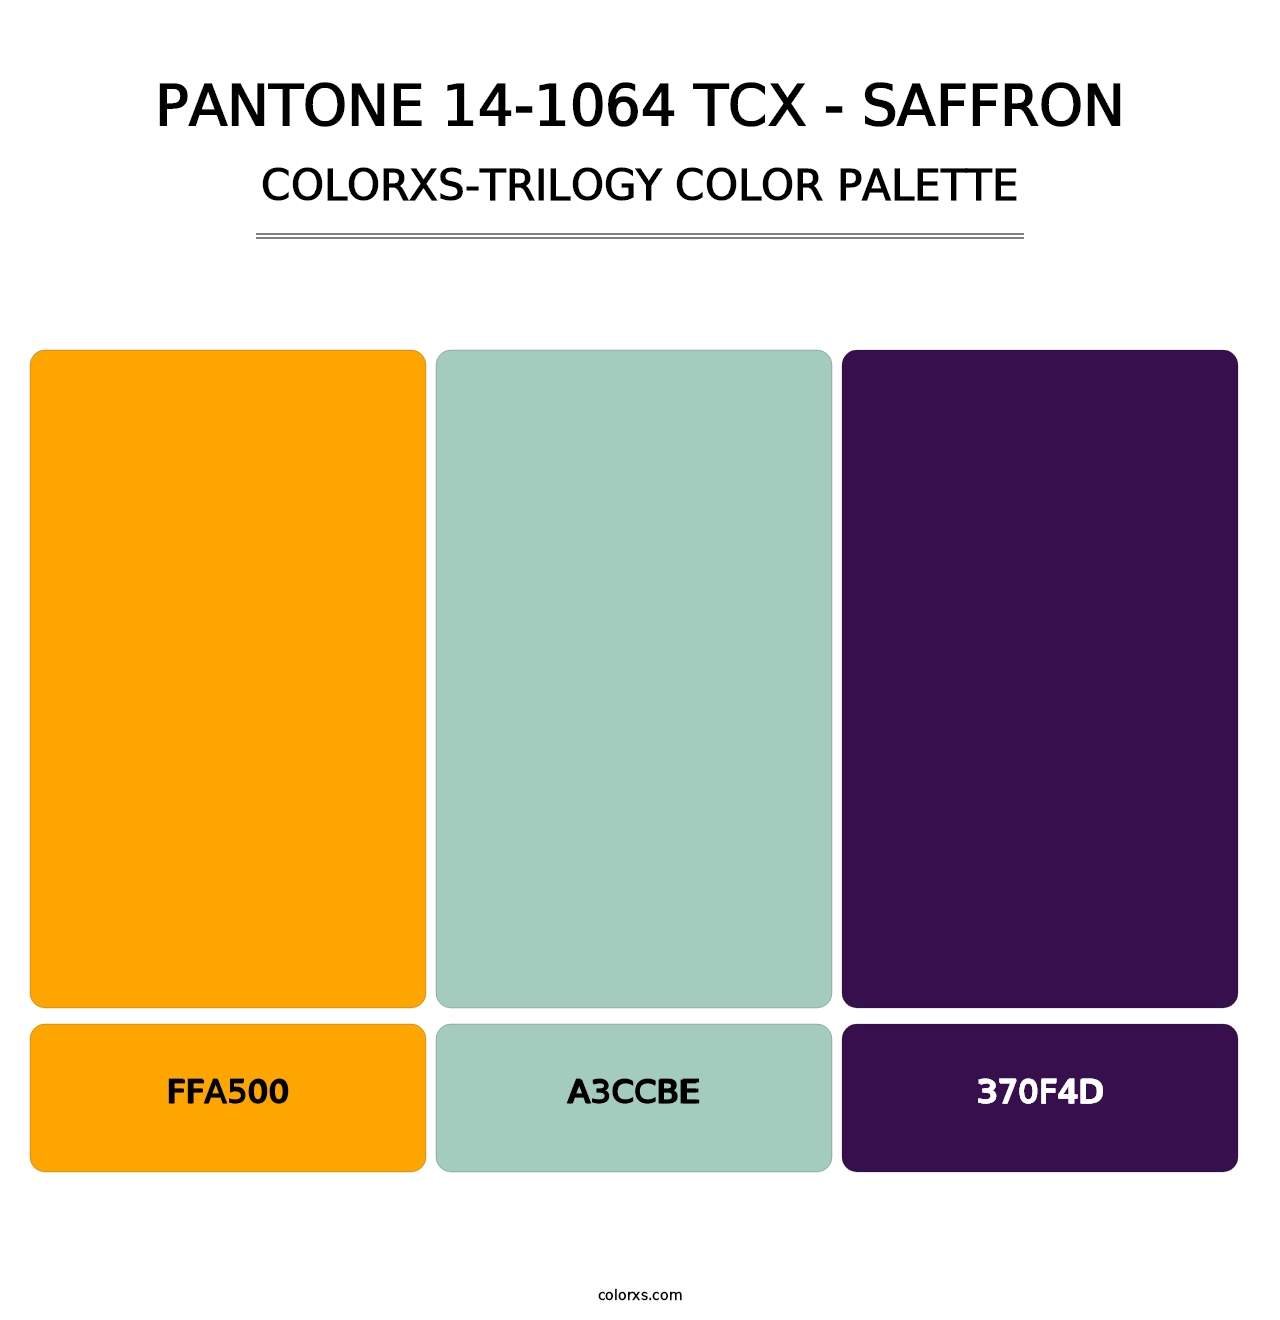 PANTONE 14-1064 TCX - Saffron - Colorxs Trilogy Palette